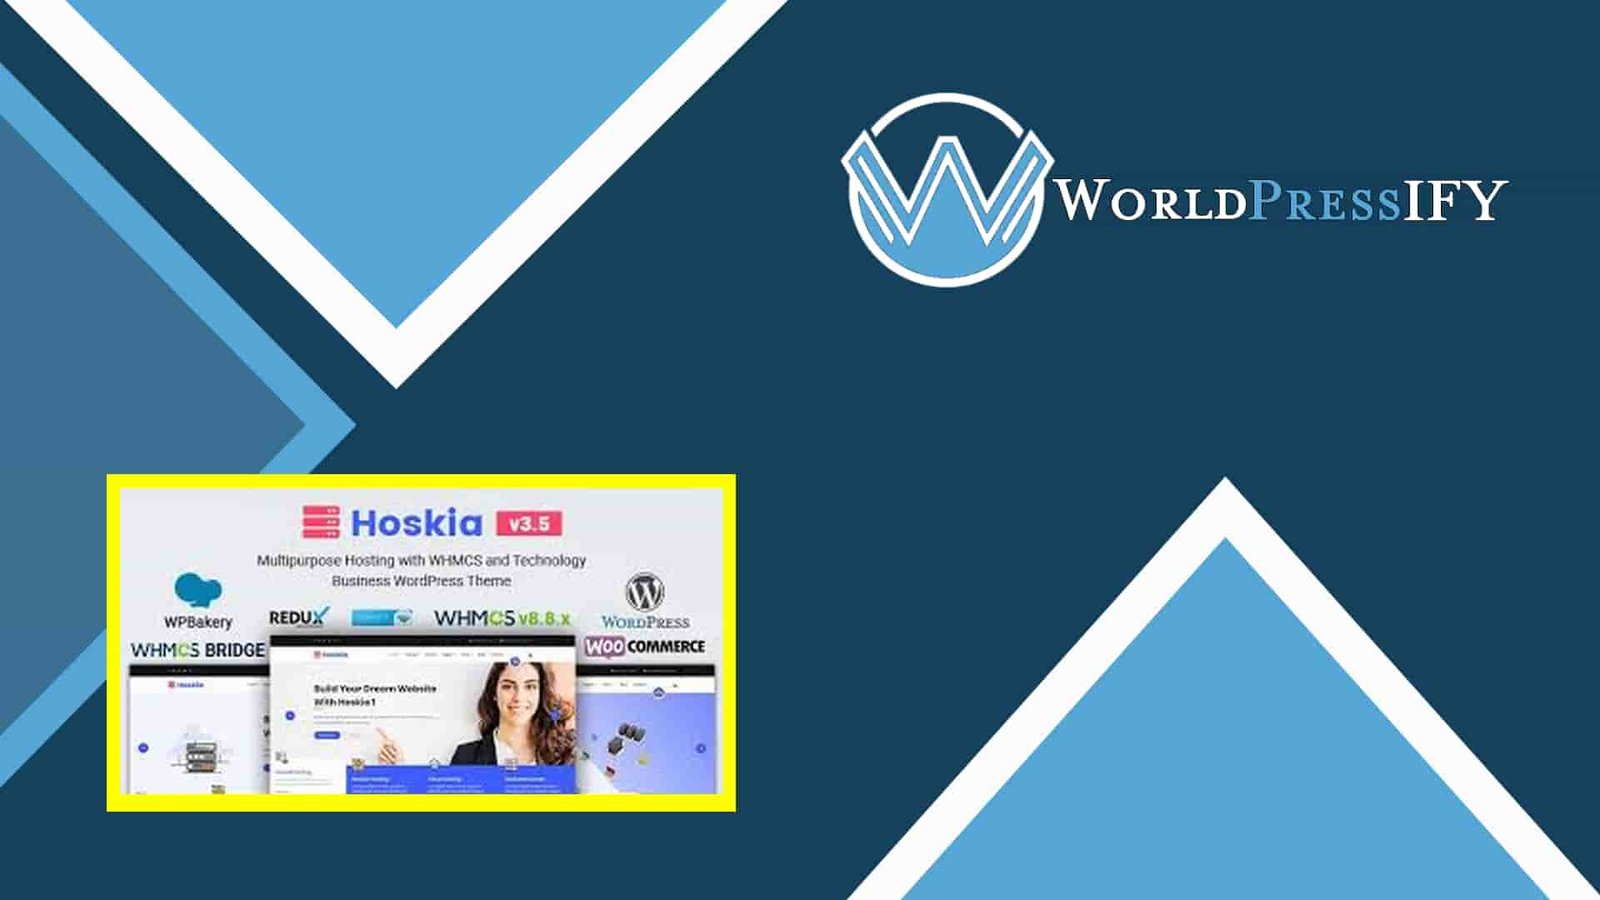 Hoskia | Multipurpose Hosting with WHMCS Theme - WorldPress IFY